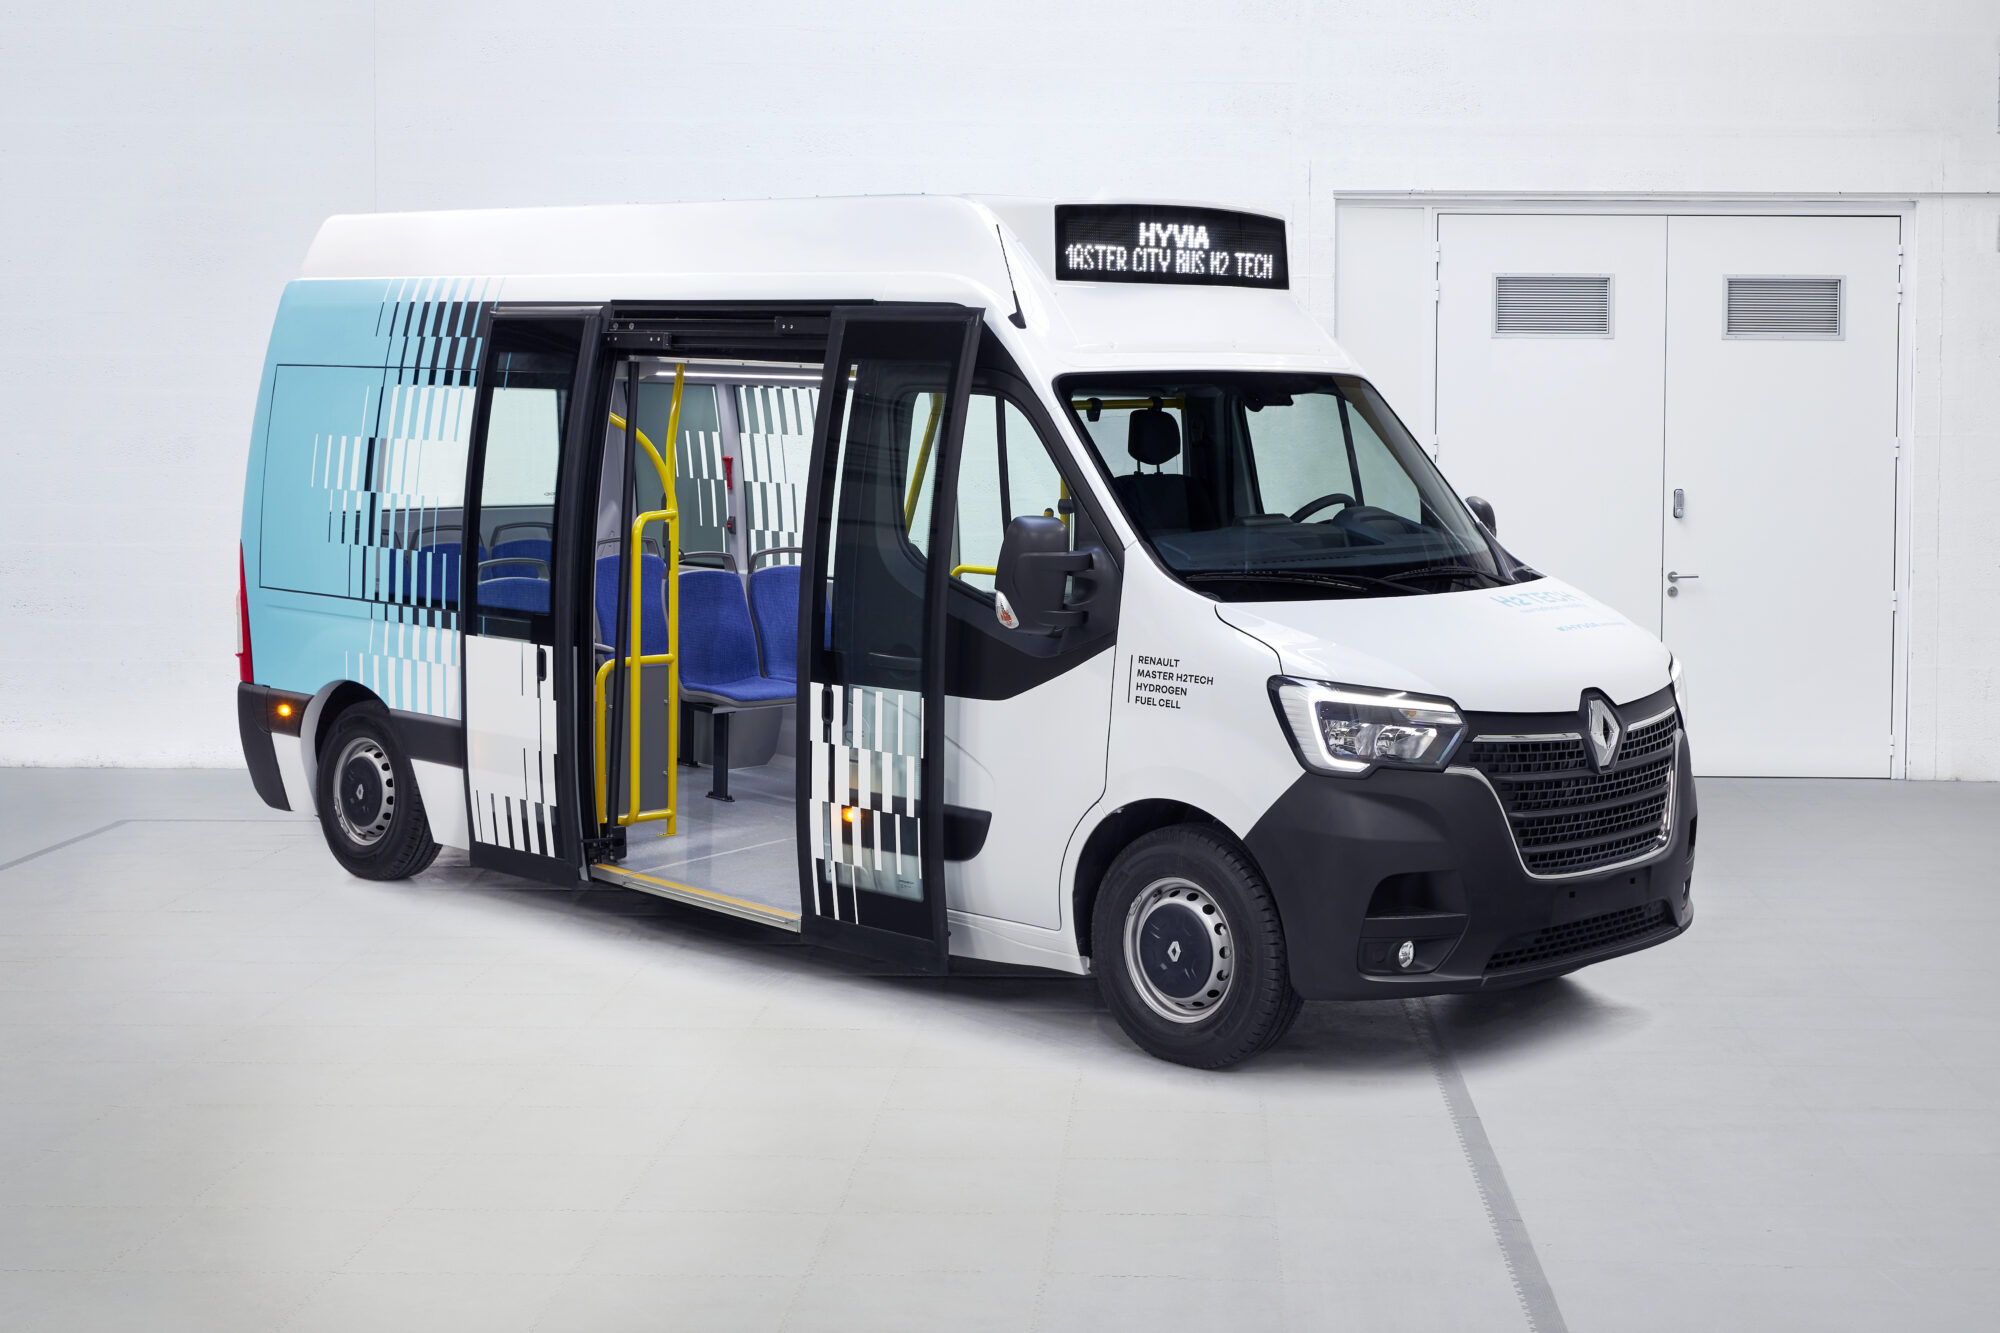 2021 - HYVIA - Renault Master City Bus H2-TECH.jpeg